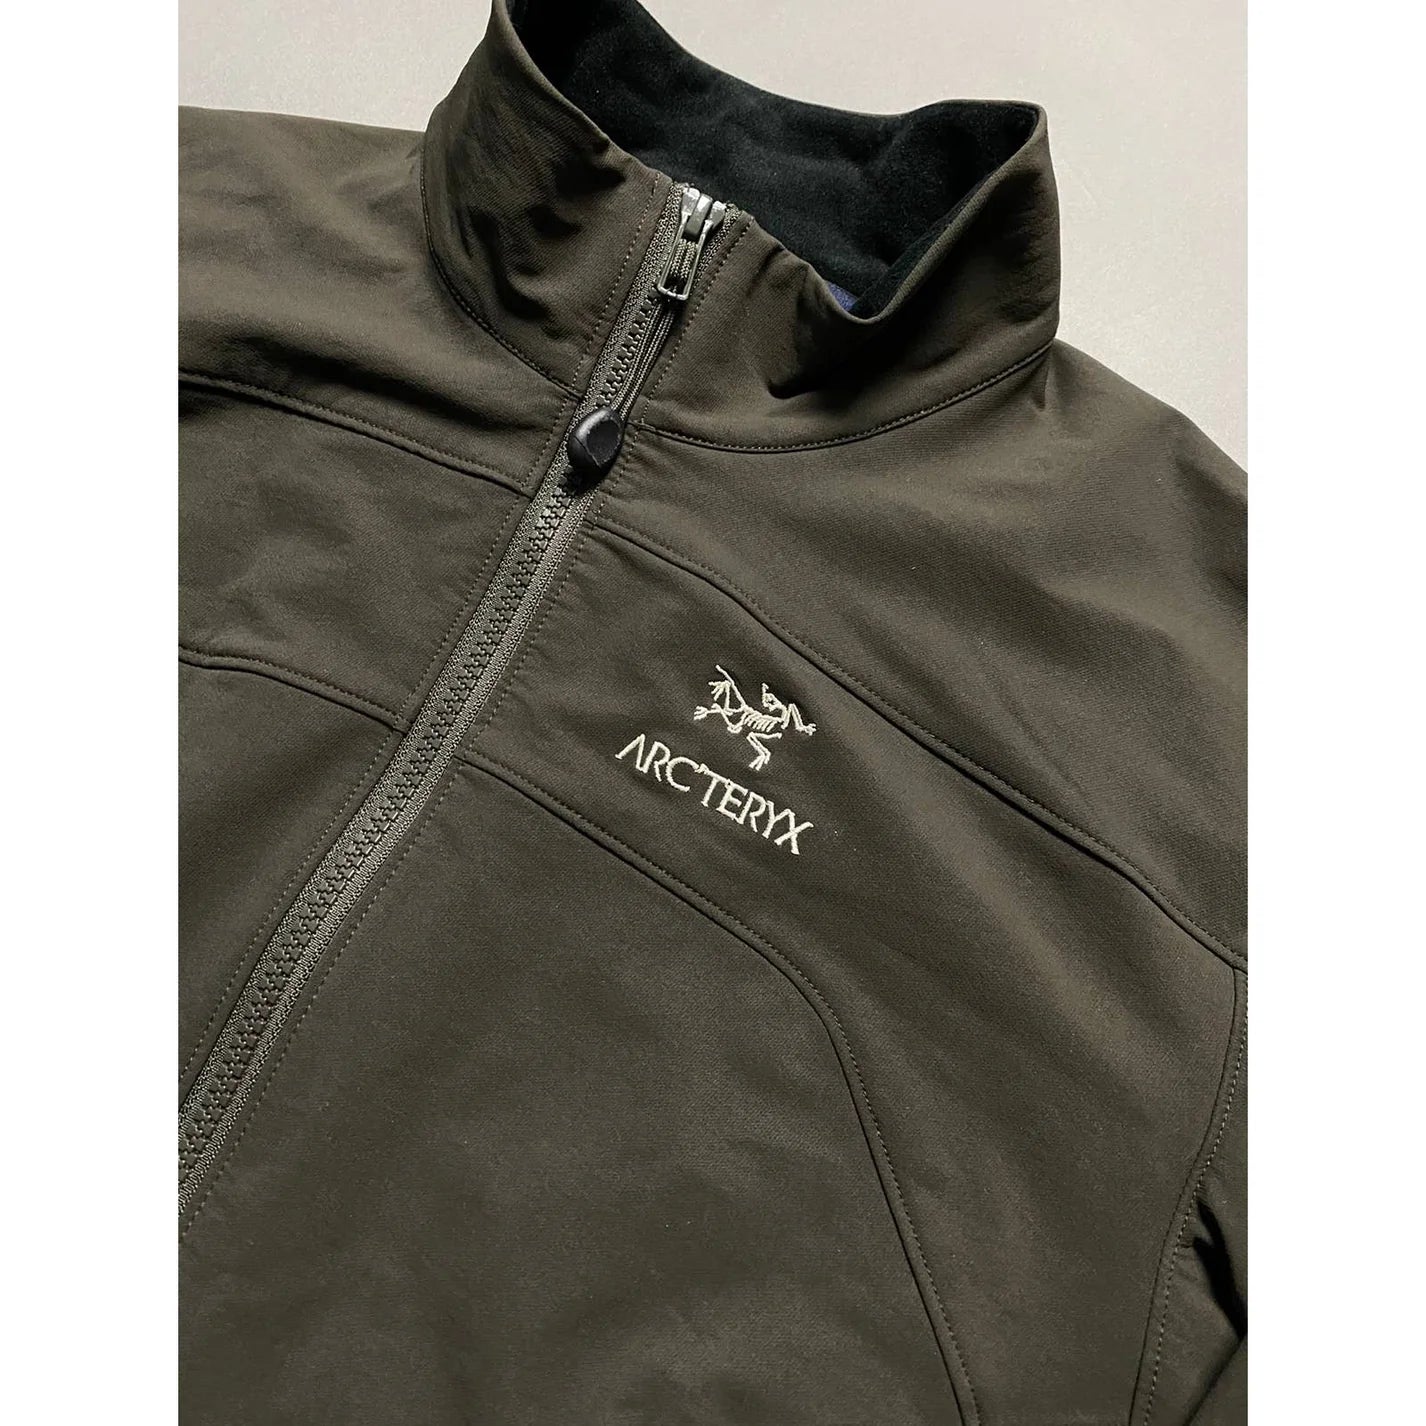 Arc’teryx Jacket Softshell Brown Vintage Lodz Polska Front Logo